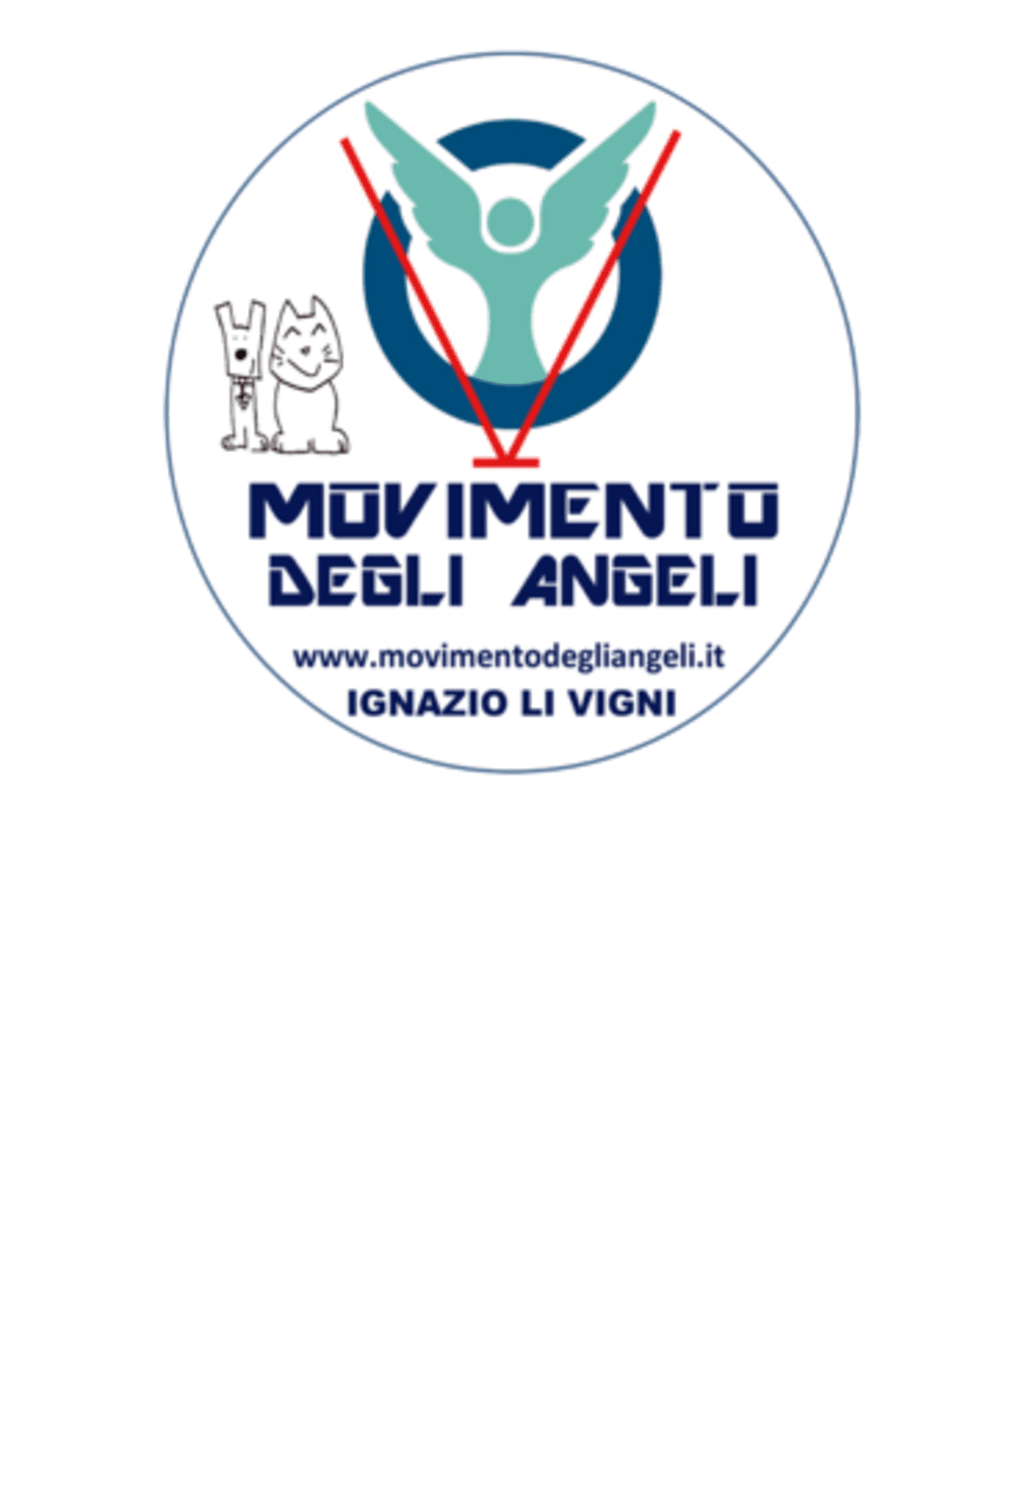 Movimento degli Angeli 2